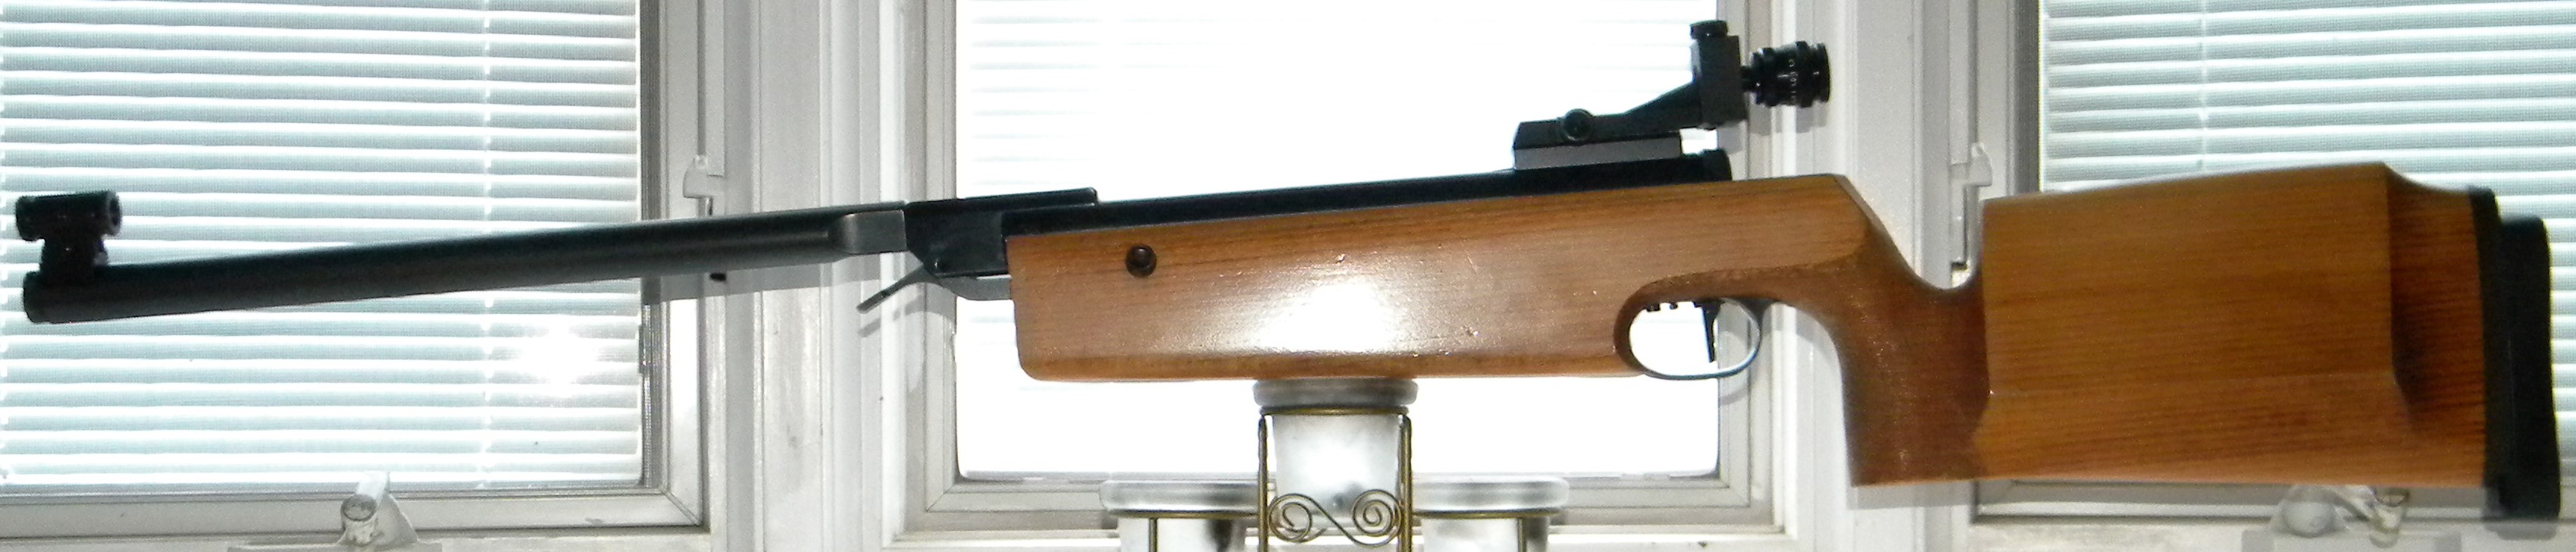 310 Walther LGV Spezial .177.JPG